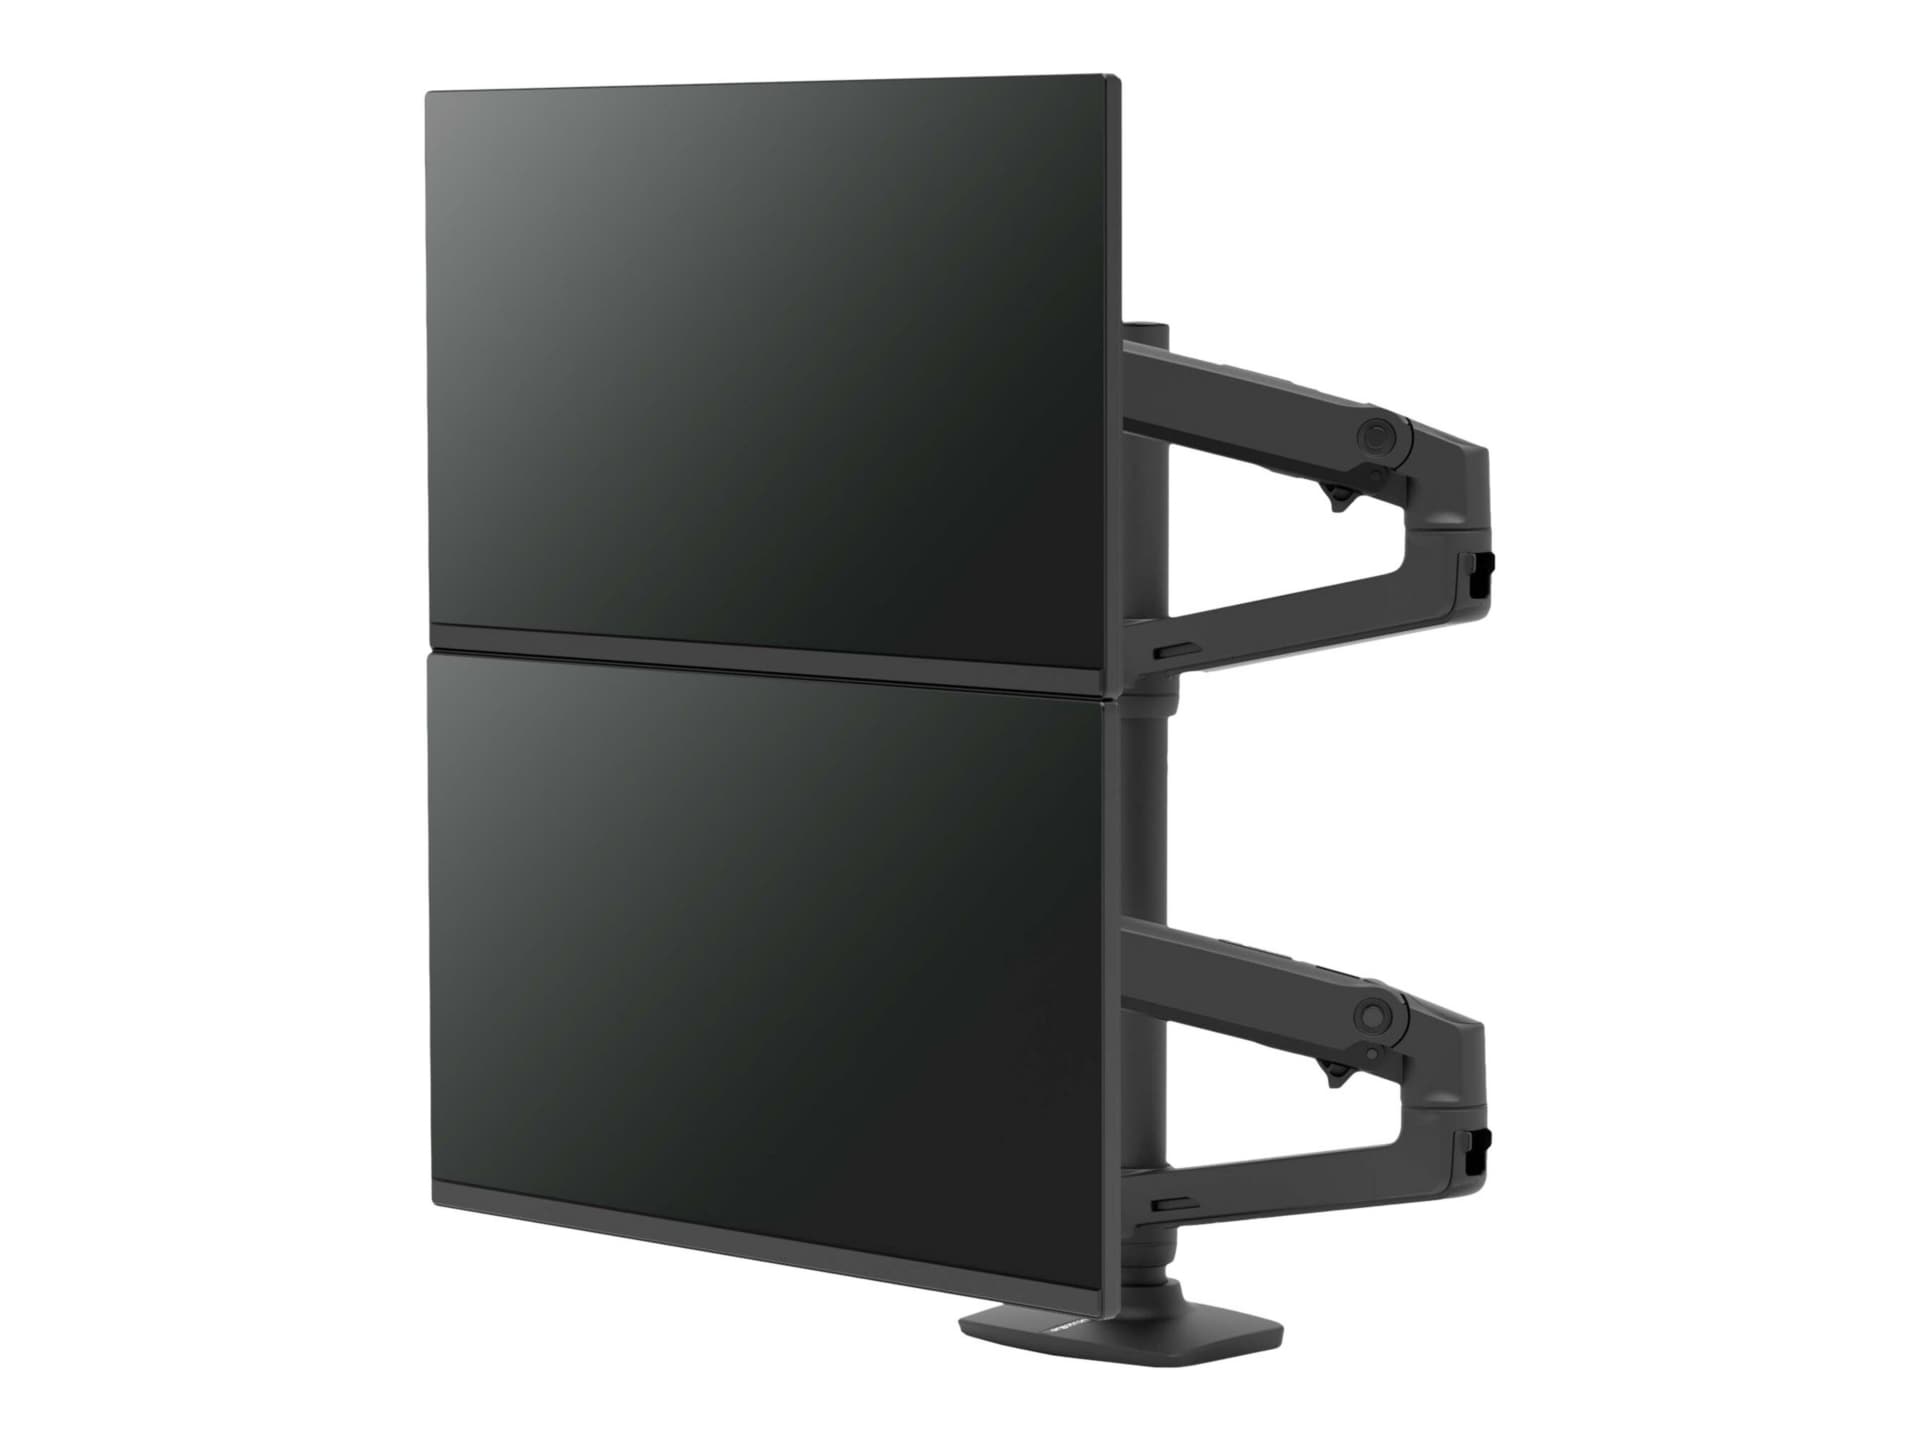 Ergotron LX mounting kit - for 2 LCD displays - matte black